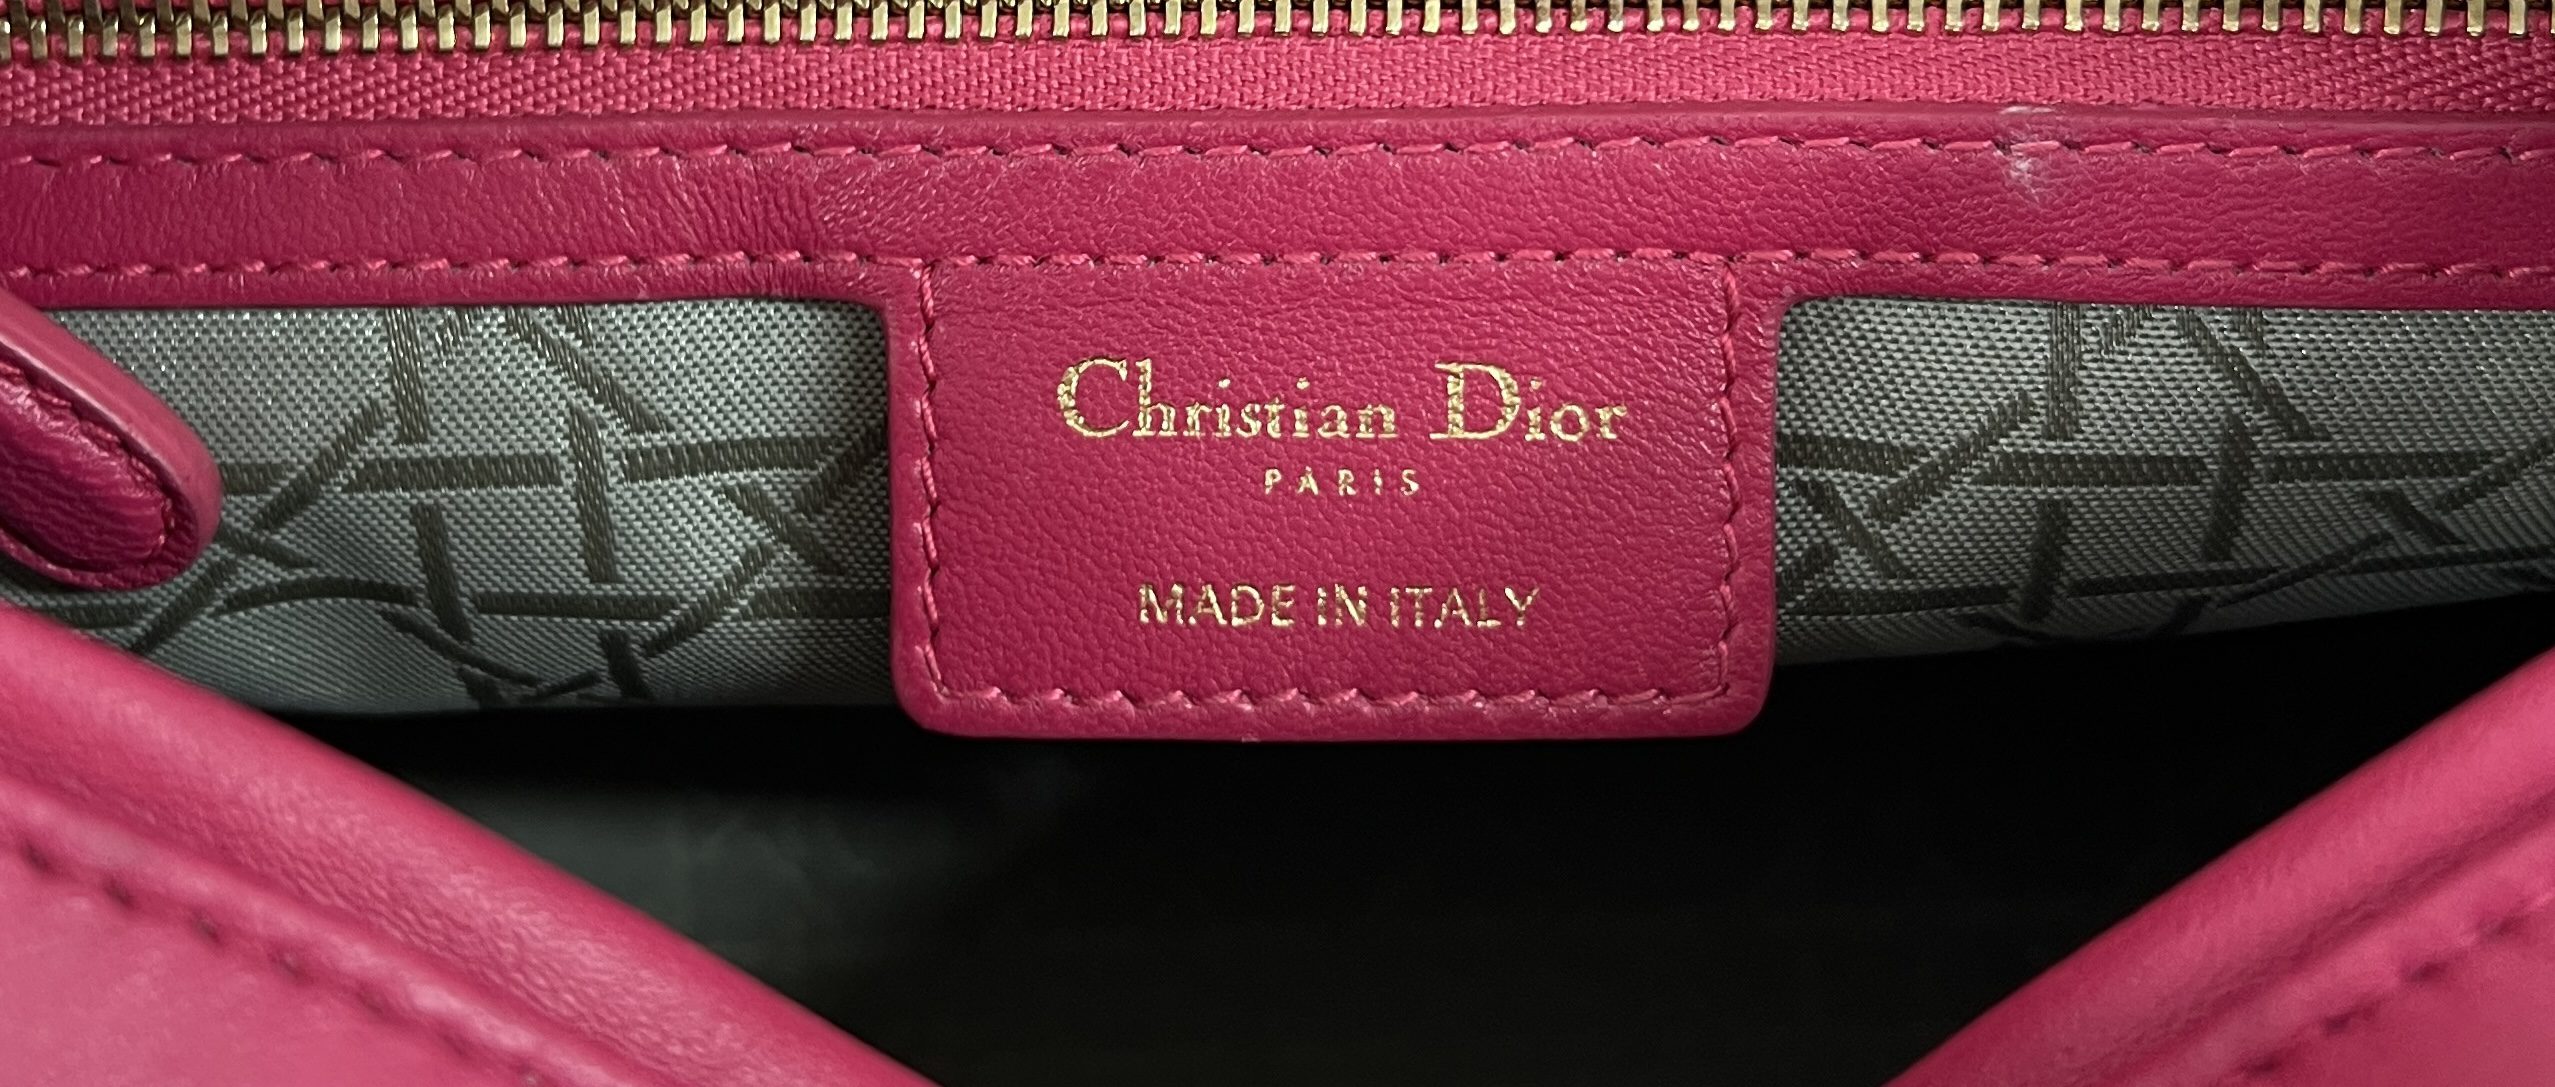 Dior Lady Dior bag hot pink